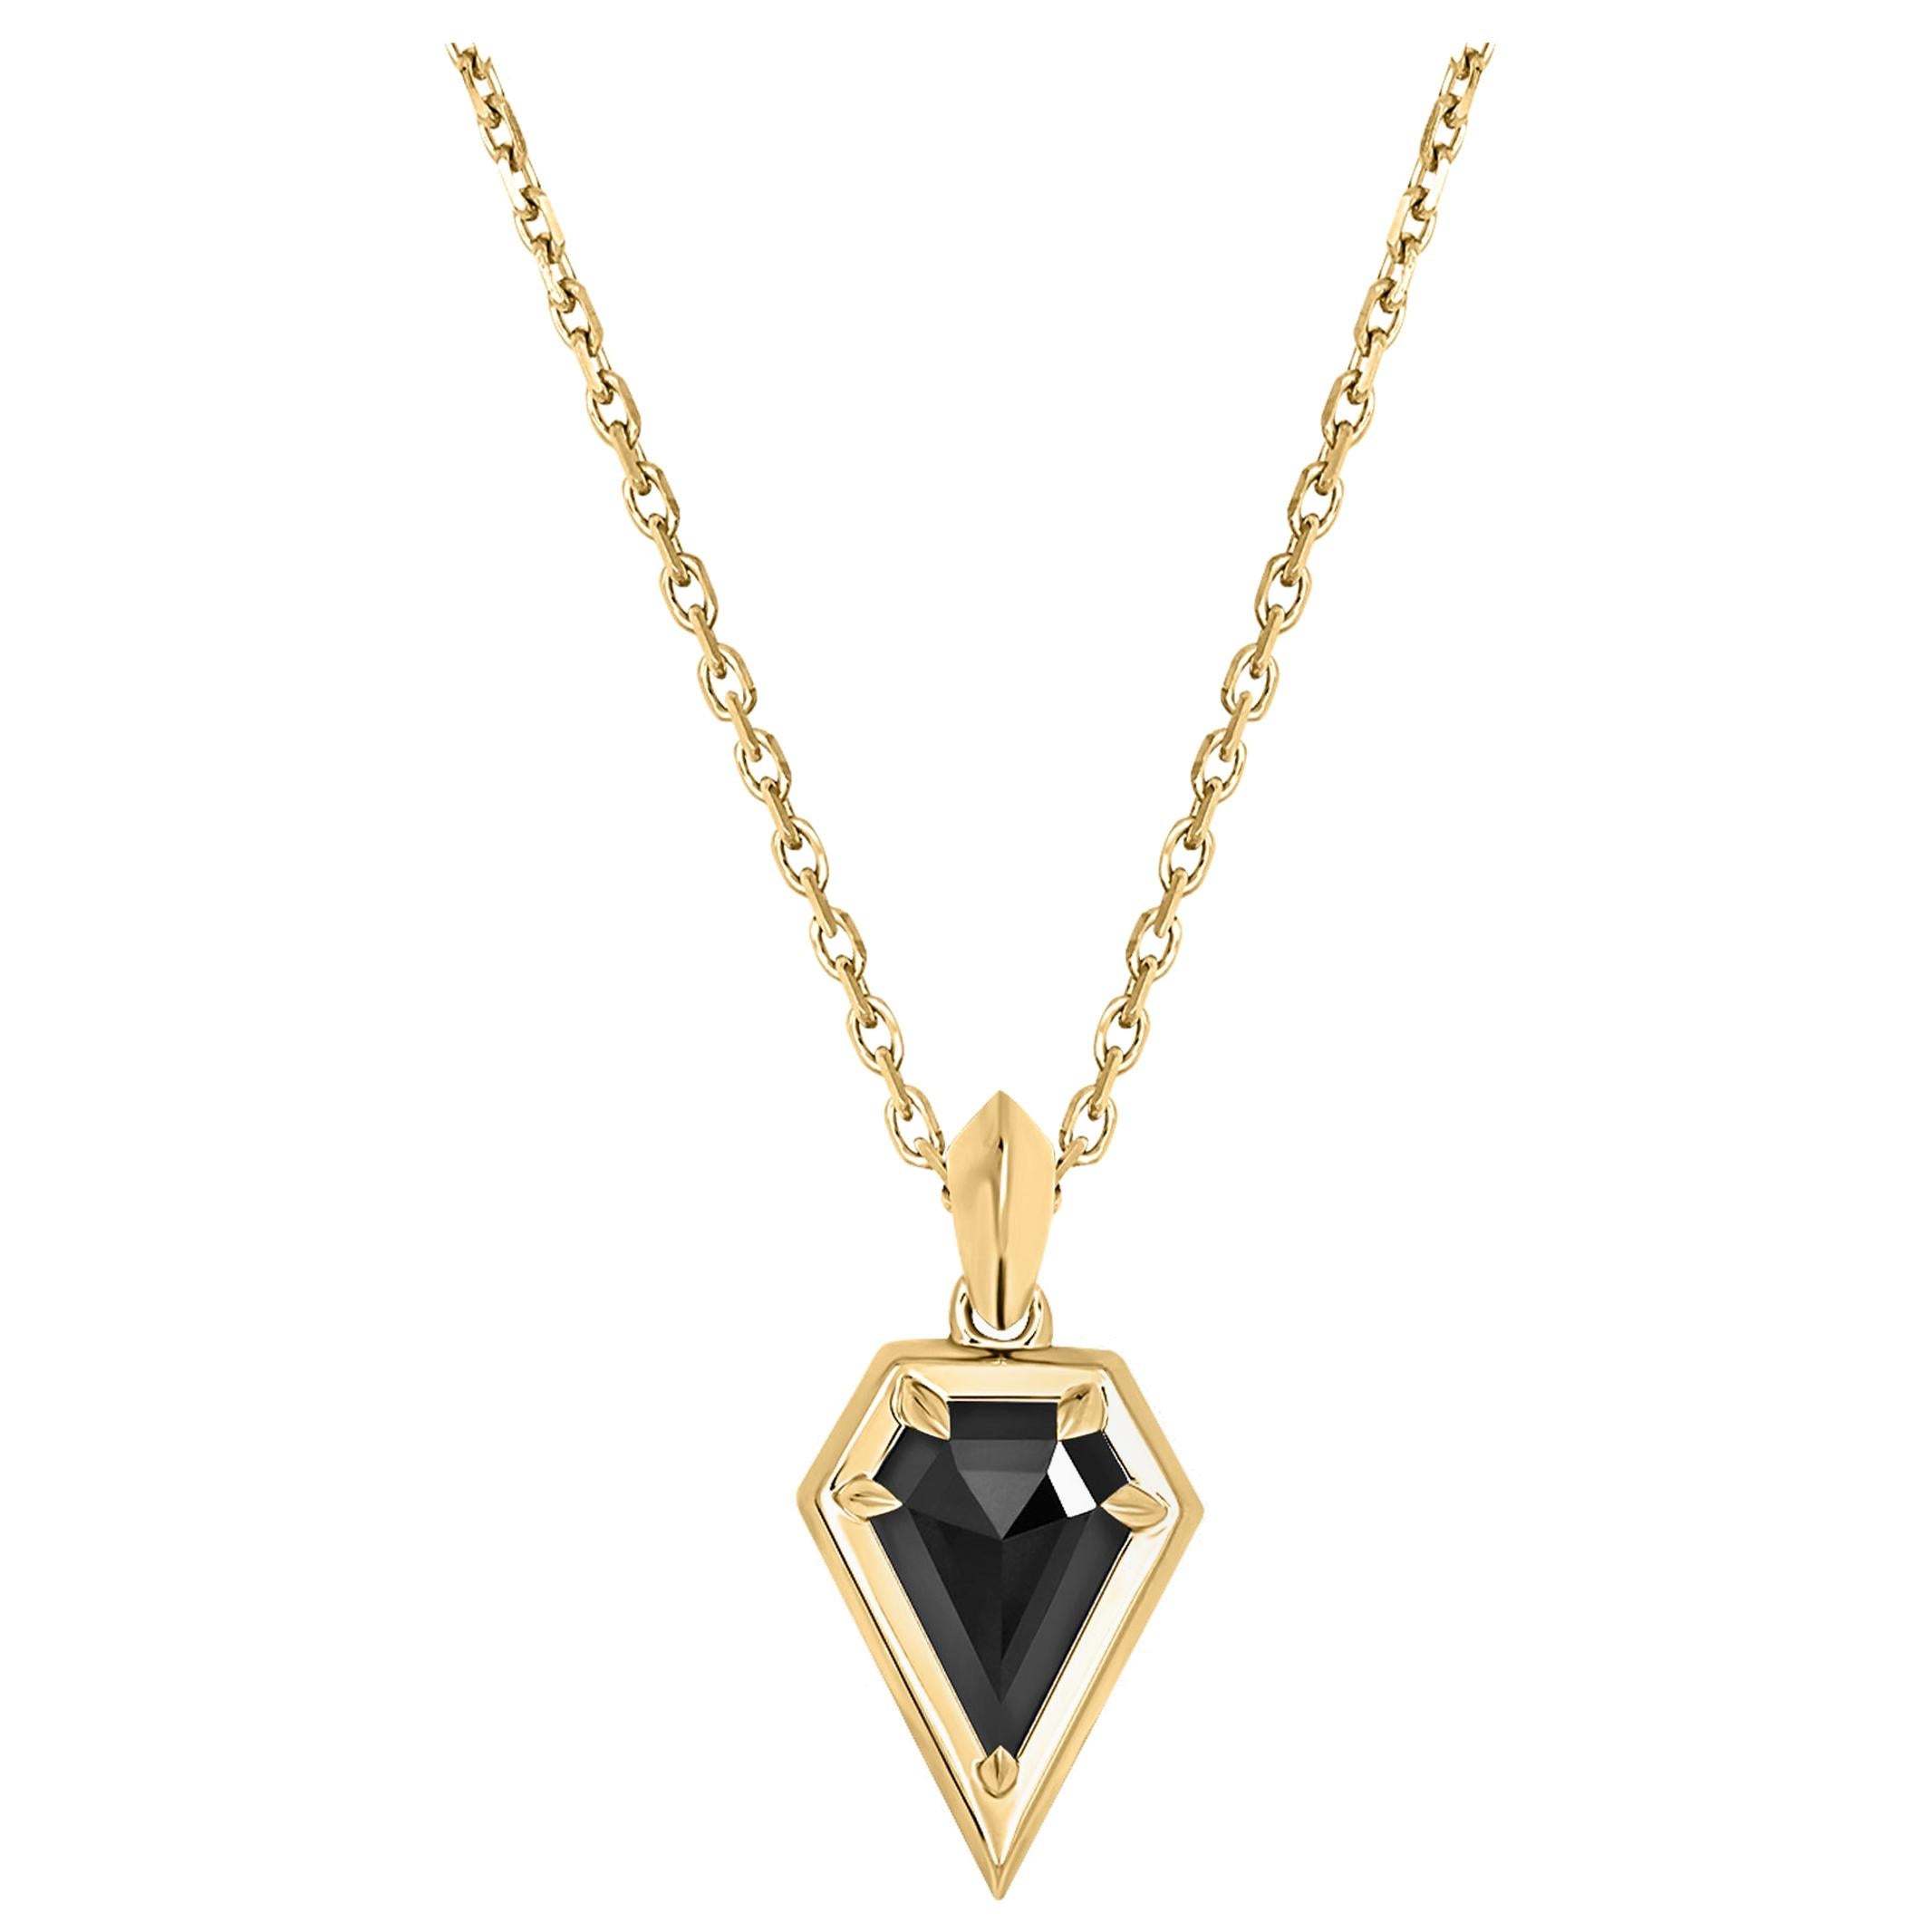 Angie Marei Aphrodite 1.20 Carat Black Diamond Pendant Necklace, 18 Karat Yellow